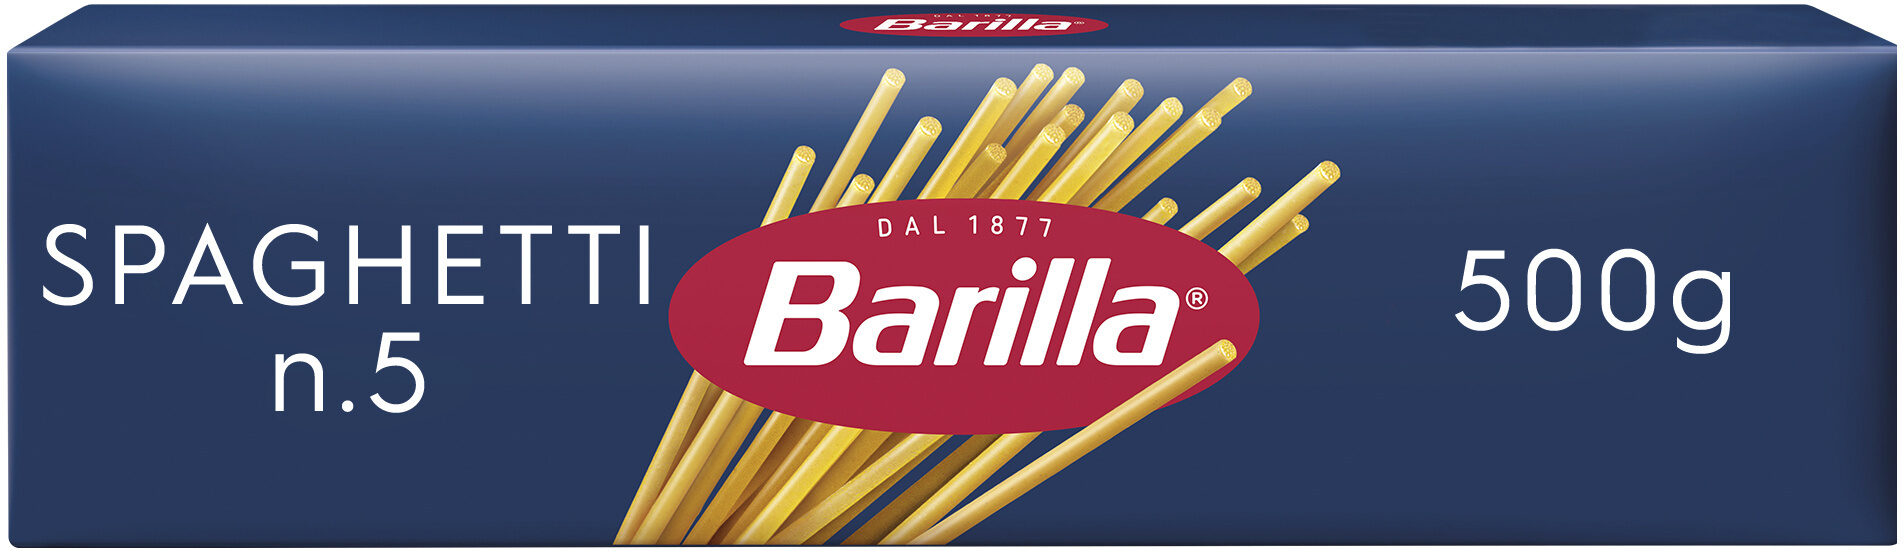 Barilla pates spaghetti n°5 500g - Product - fr